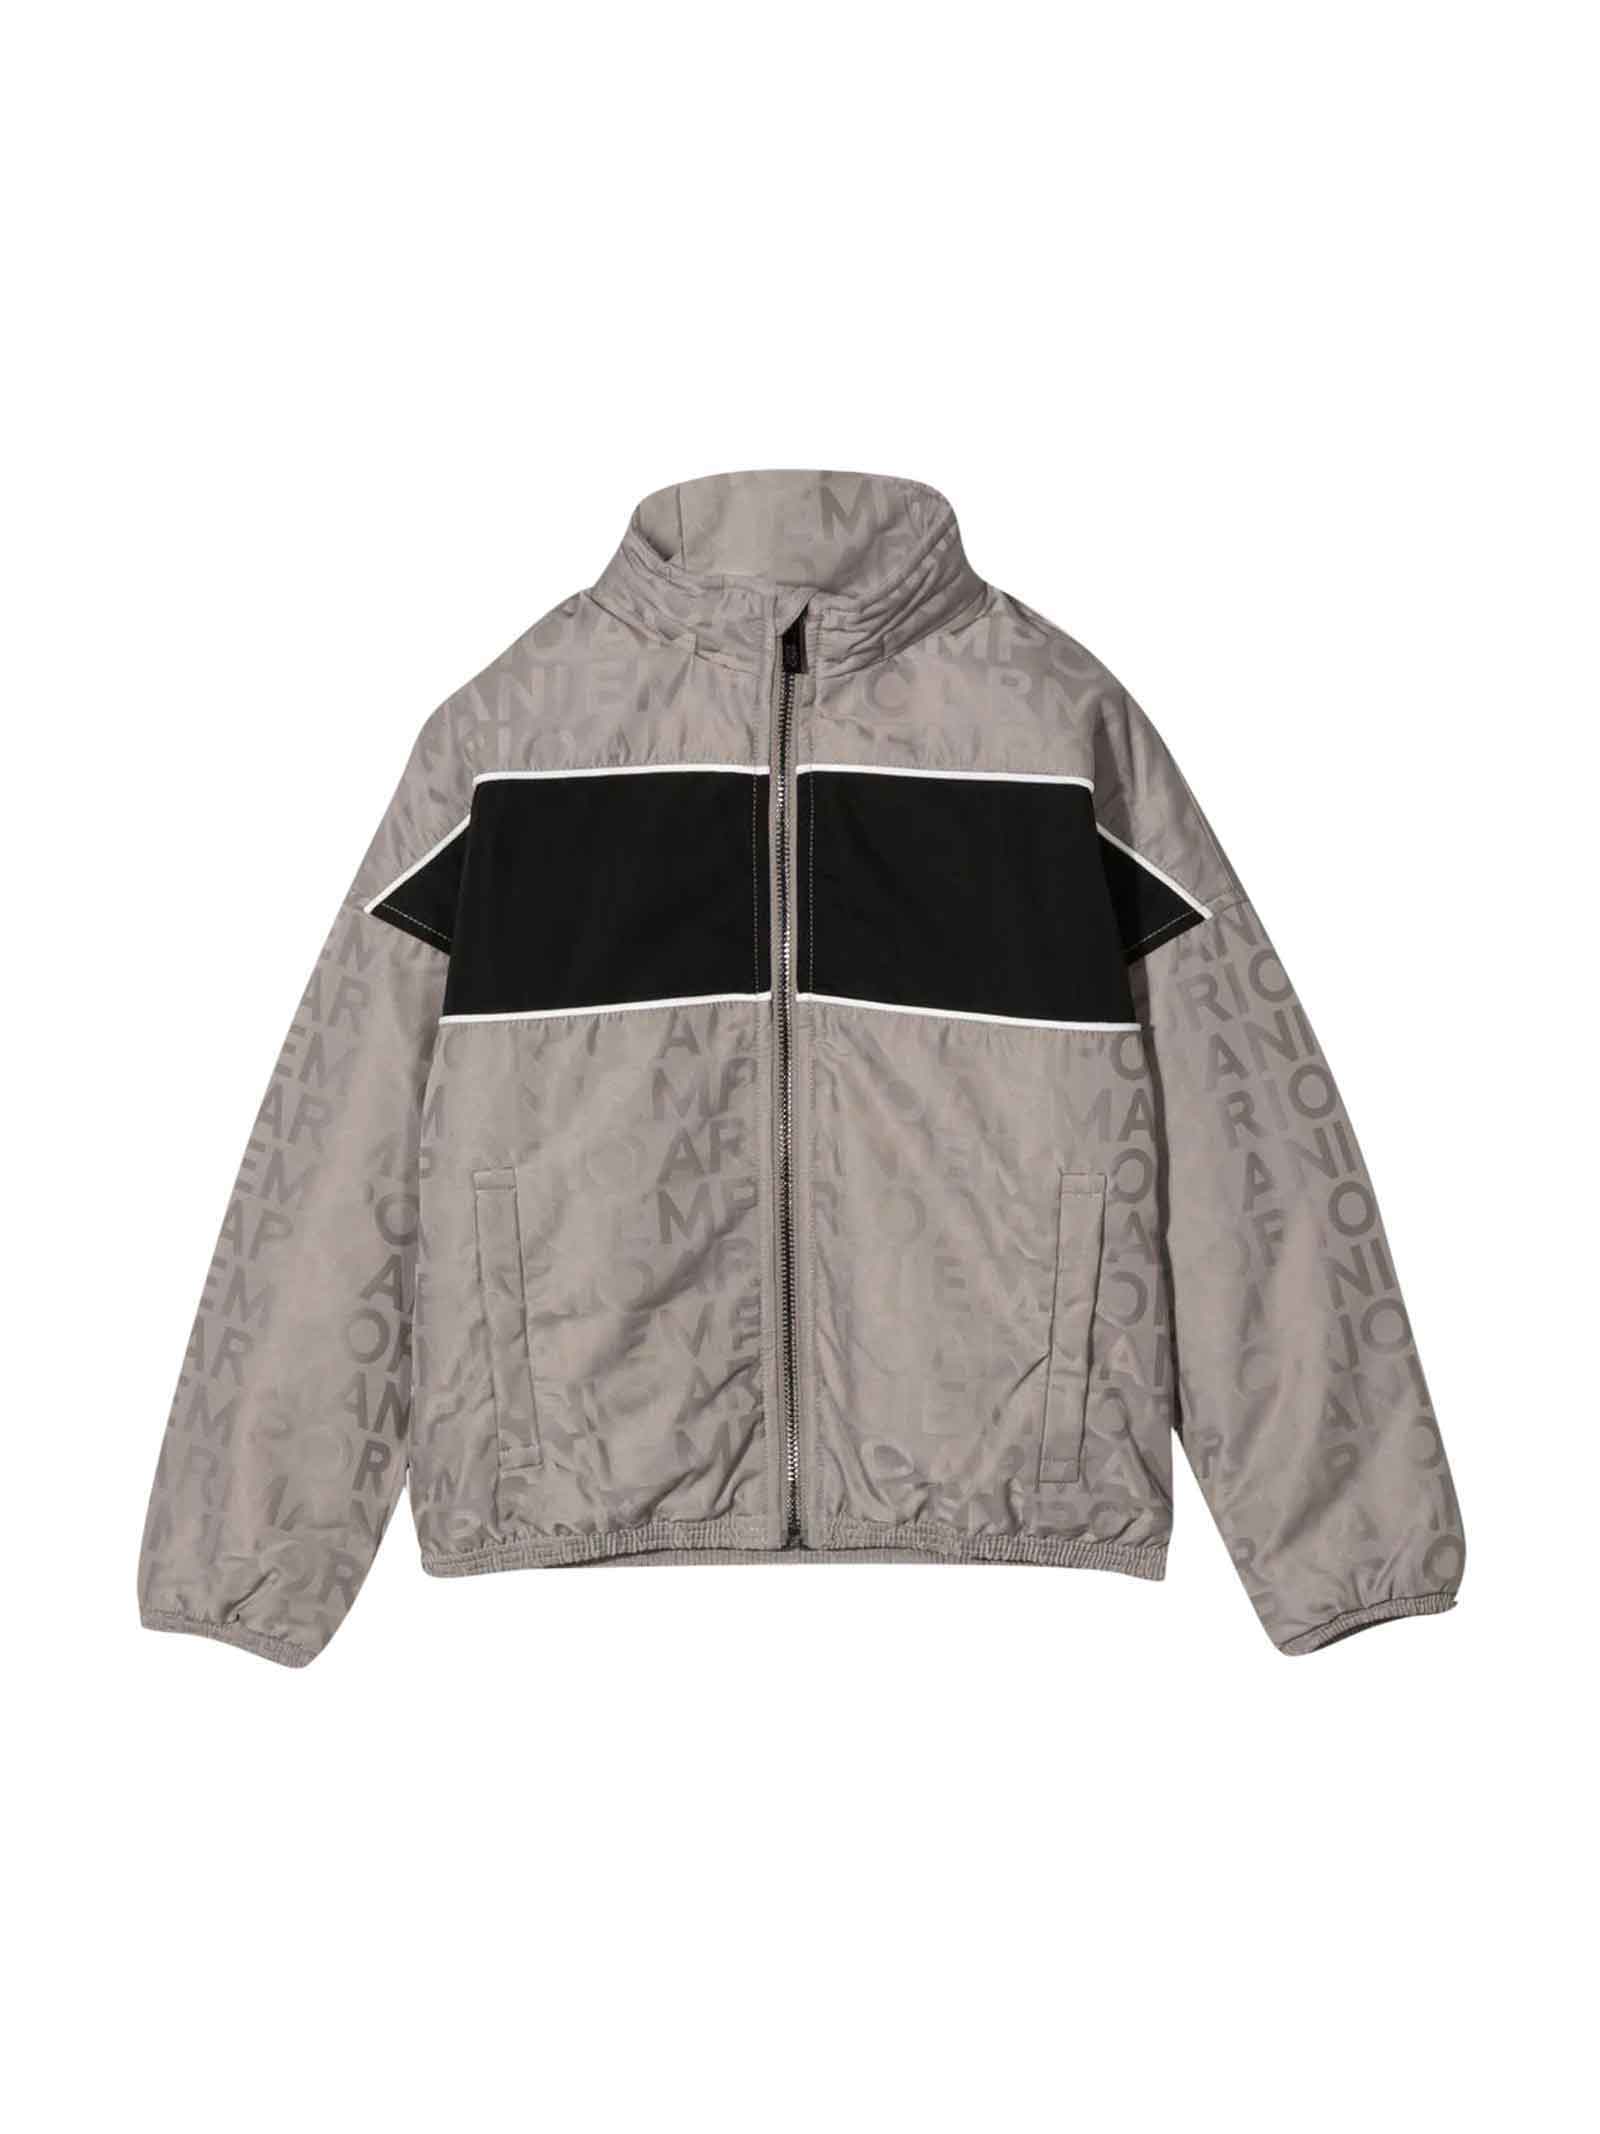 Emporio Armani Grey Jacket With Side Pockets, Logo Press And Zip Closure